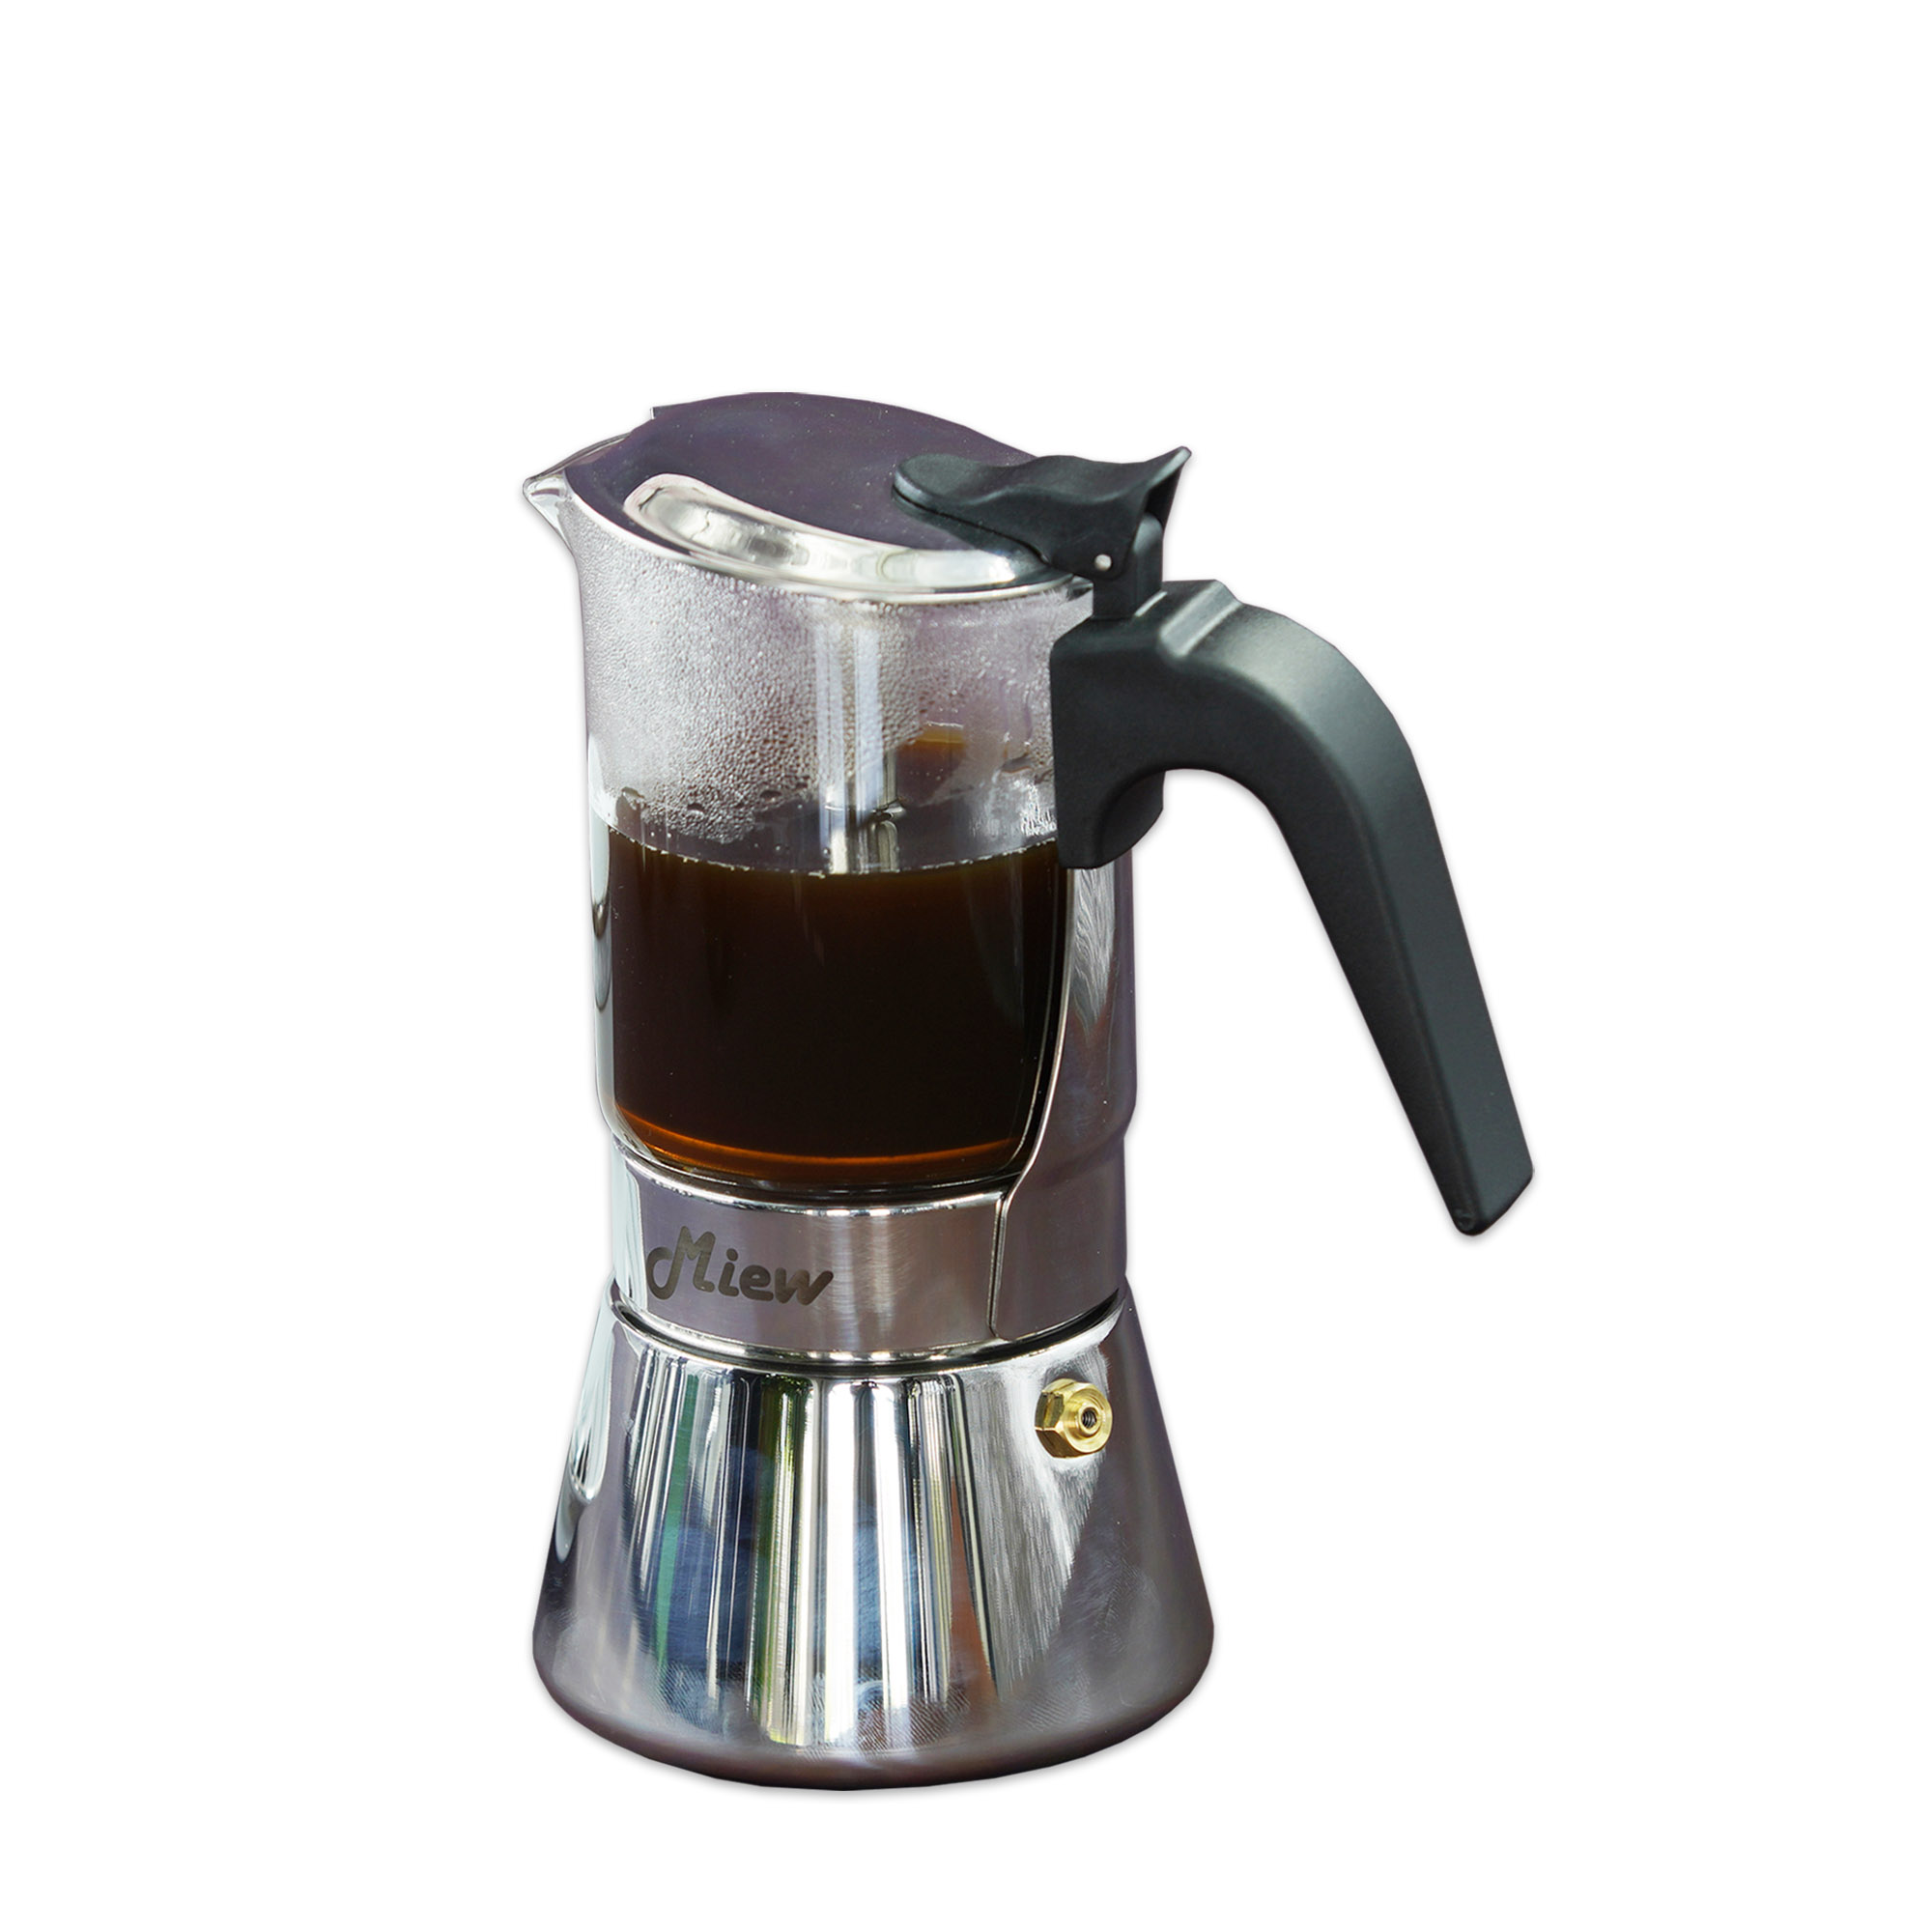 Miew Moka pot／Coffee Maker มอคค่าพอท เครื่องชงกาแฟ กาต้มกาแฟ หม้อชงกาแฟ สแตนเลสสตีล+แก้ว รุ่นAX633160